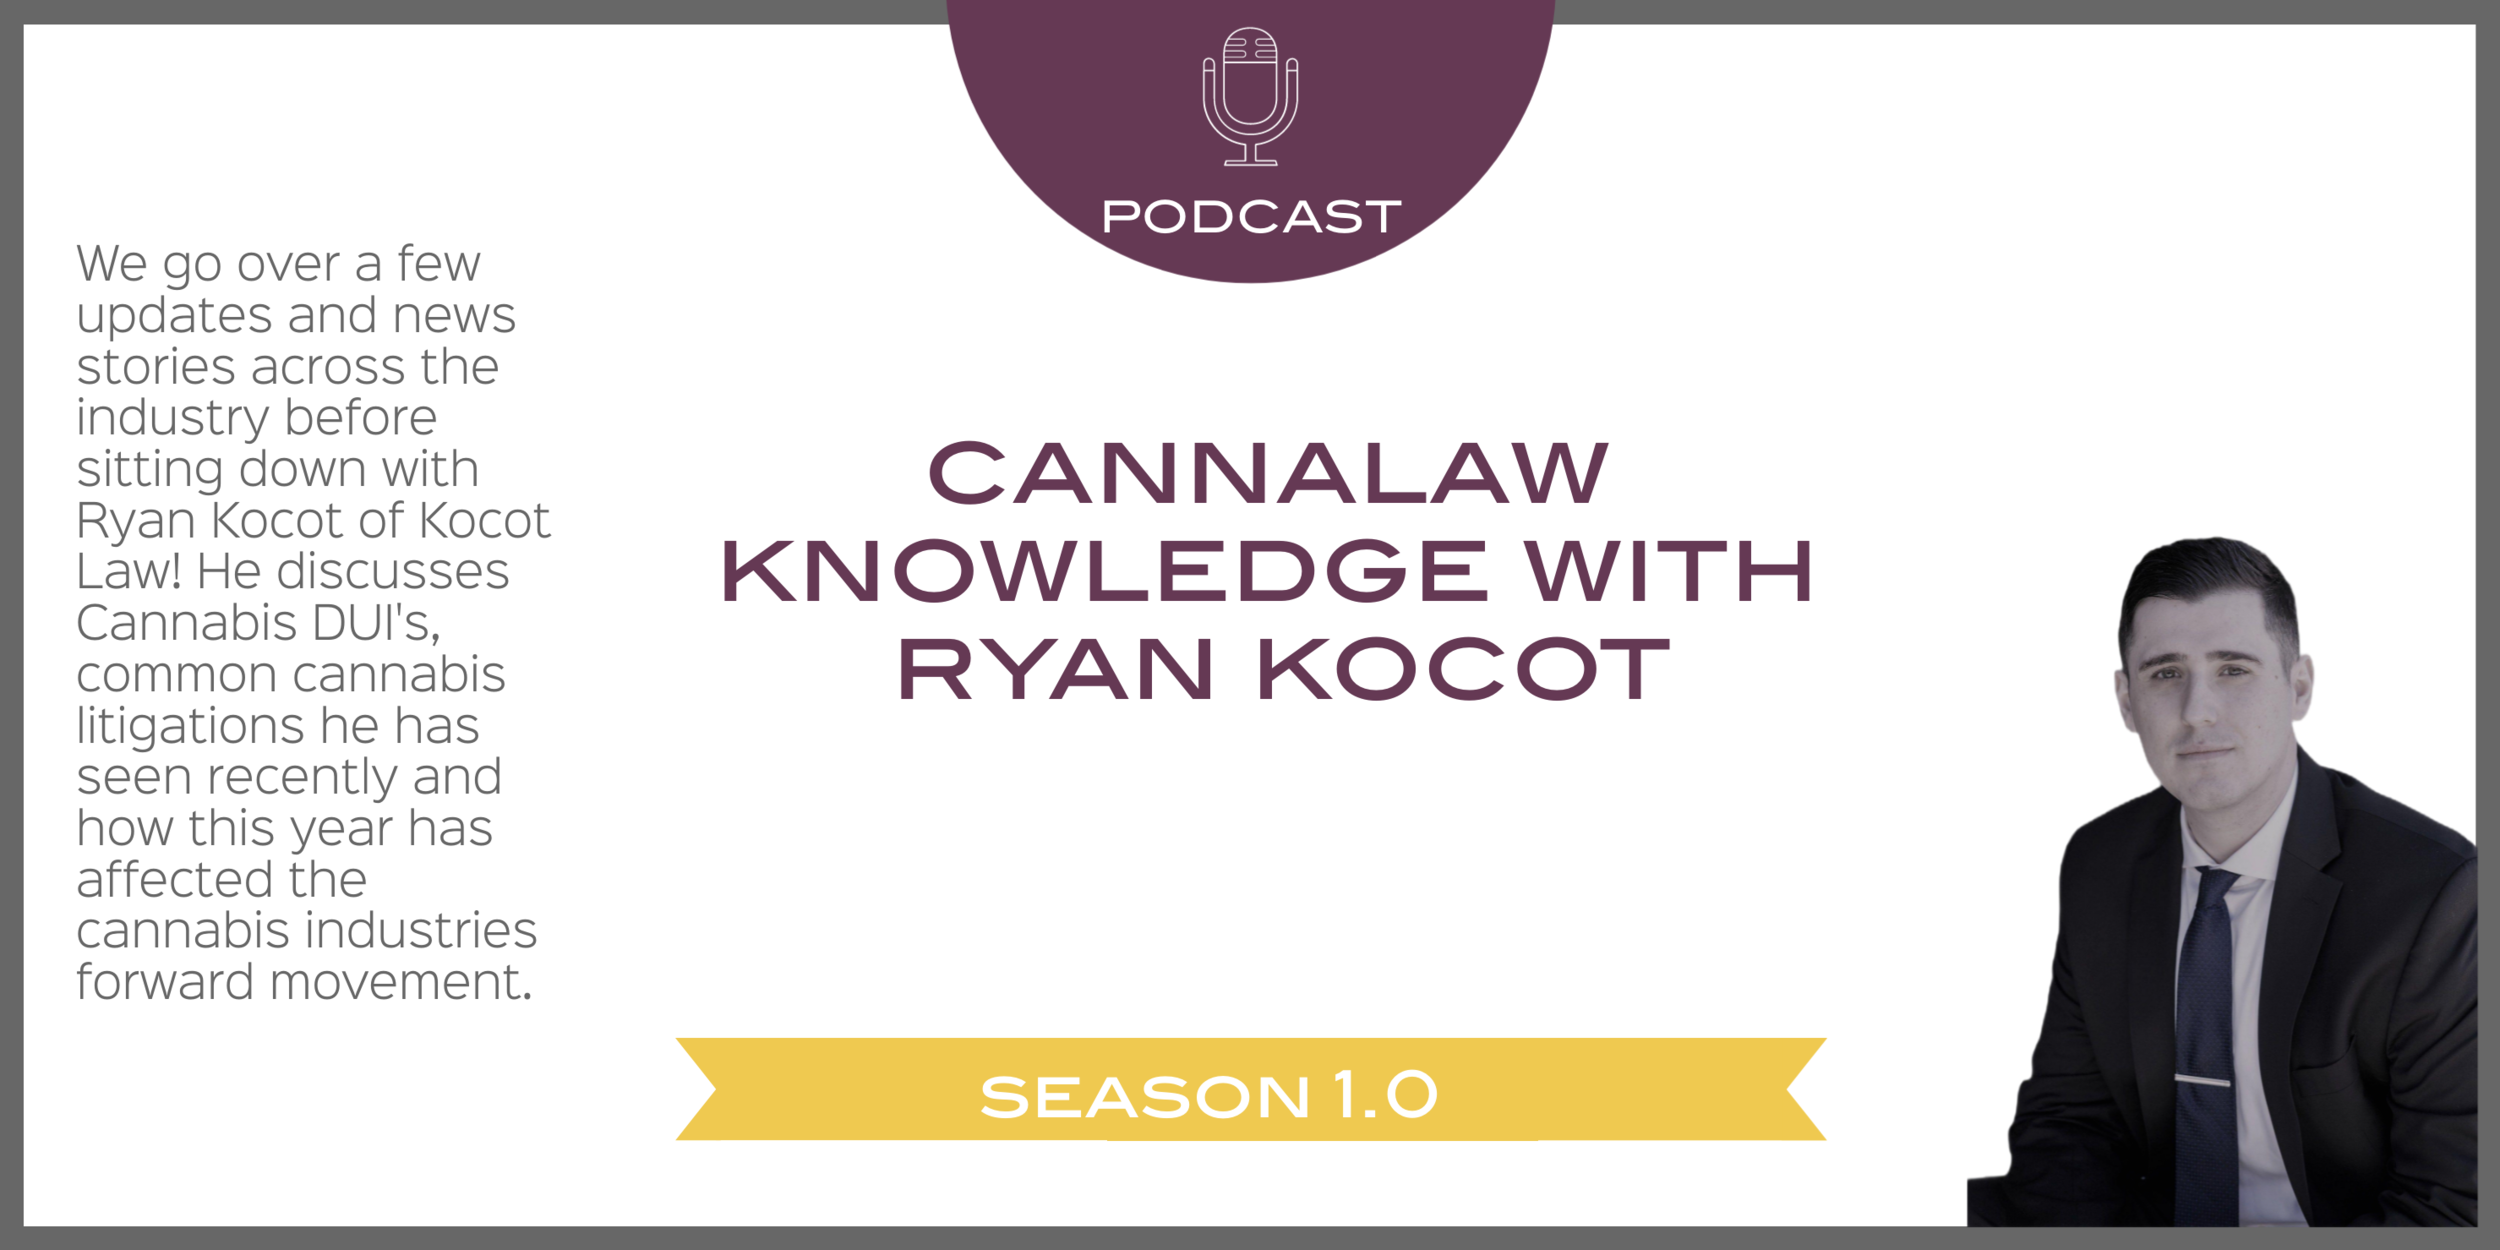 CannaLaw Knowledge with Ryan Kocot